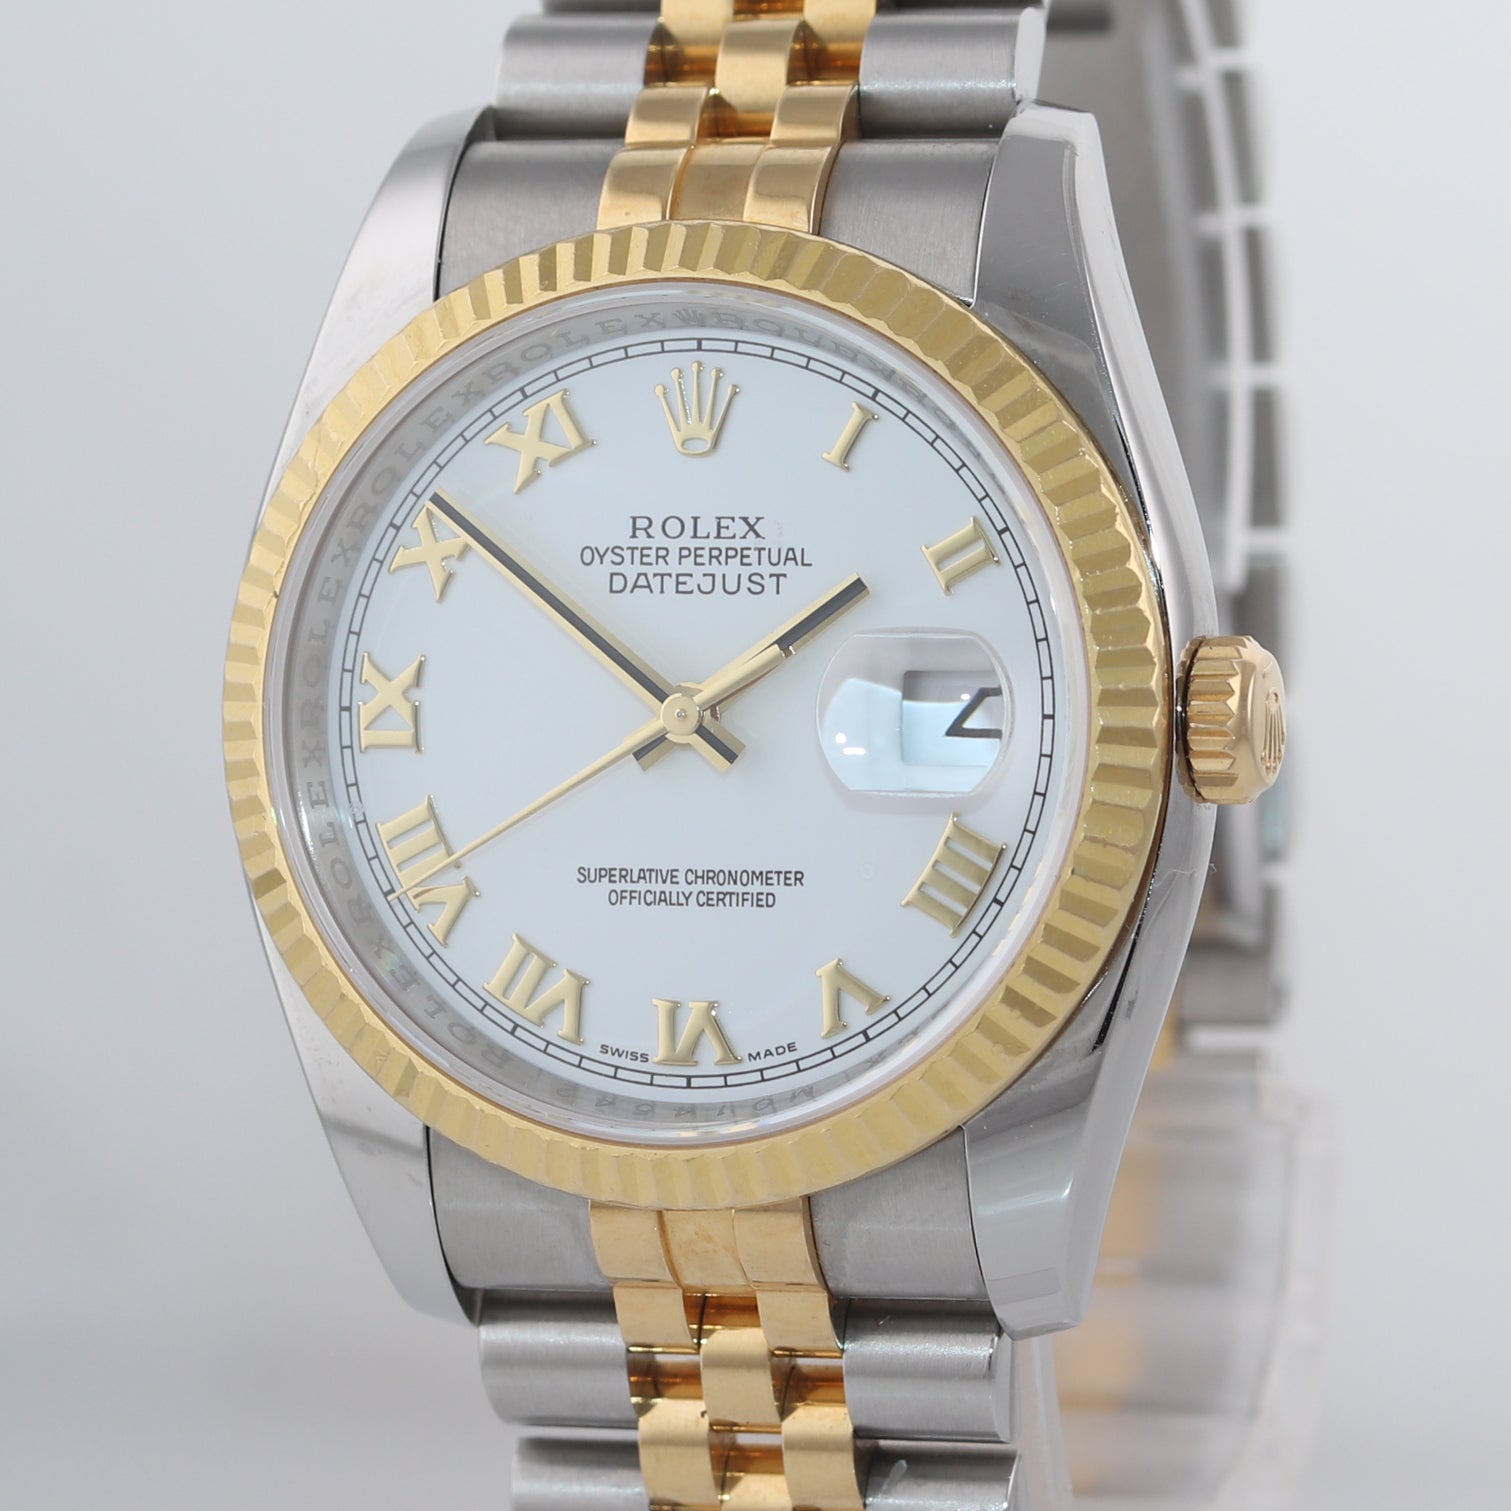 2008 Rolex DateJust Super Jubilee 36mm White Roman 116233 18k Gold Watch Box